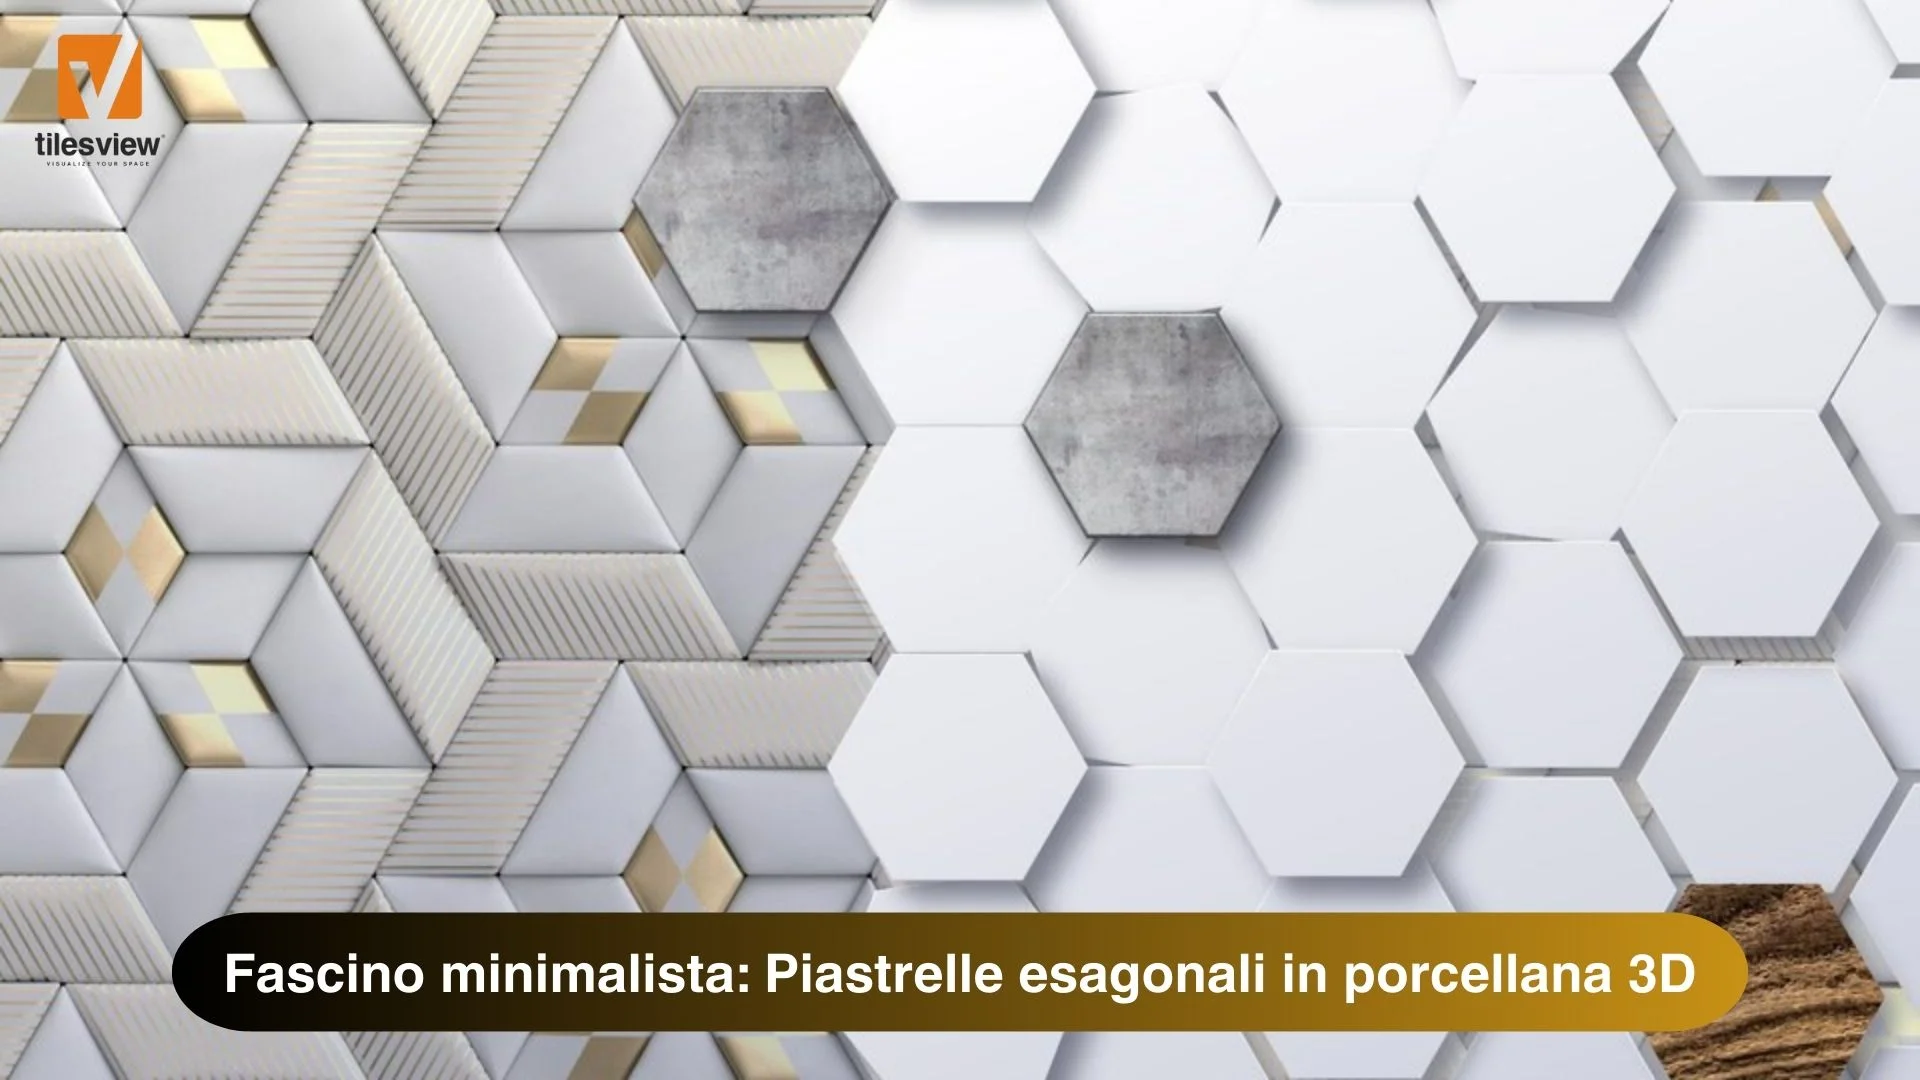 Fascino minimalista: Piastrelle esagonali in porcellana 3D